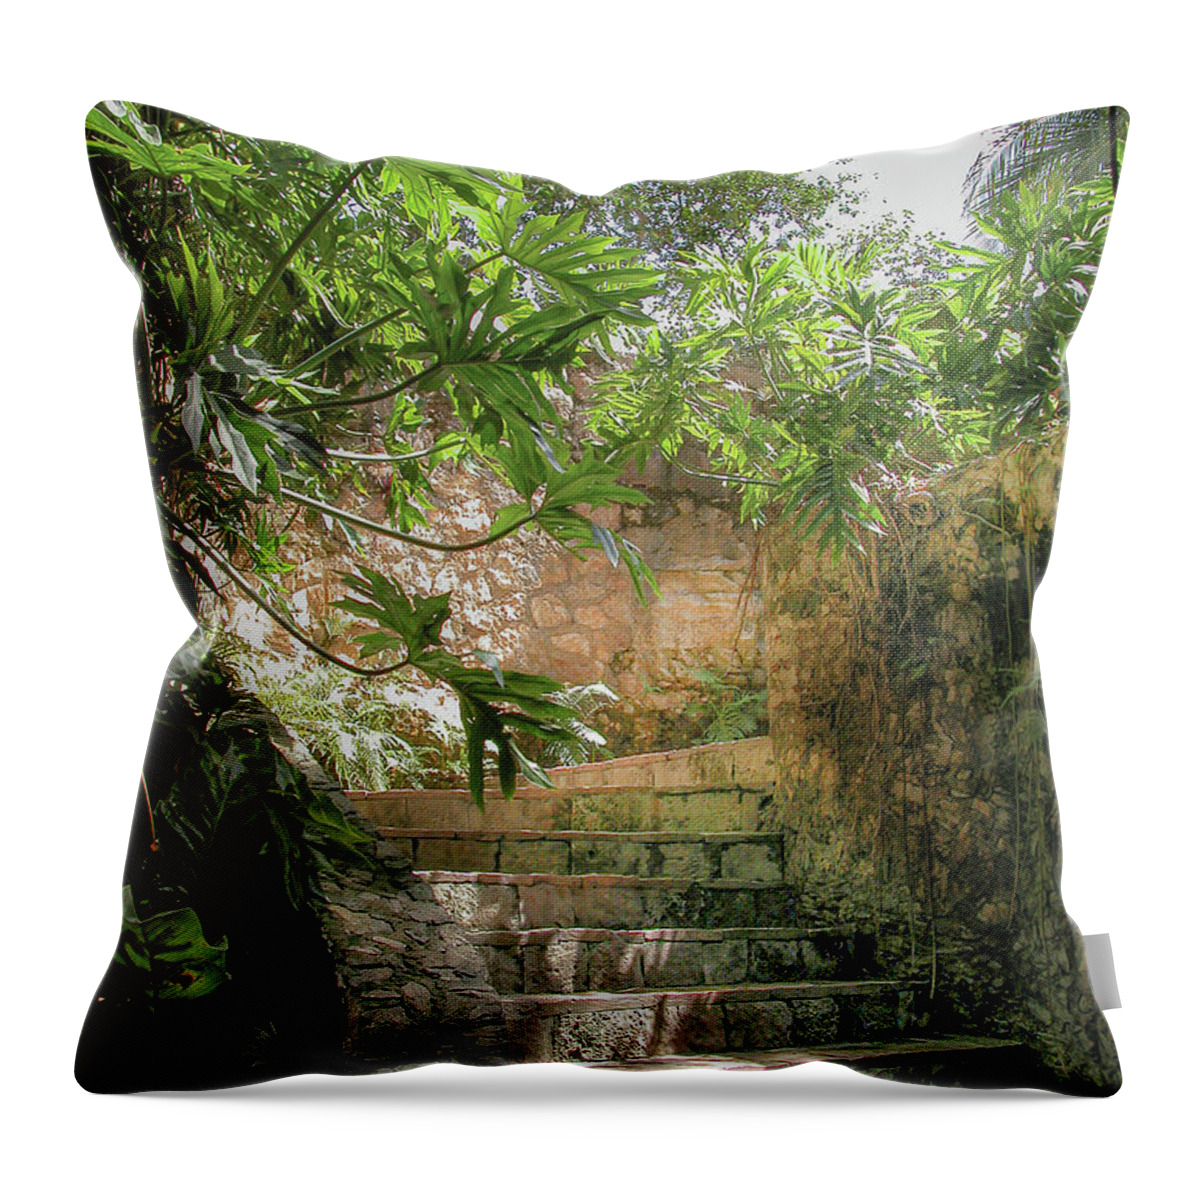 Chichen Itza Throw Pillow featuring the photograph Steps near cenote - Chichen Itza #1 by Frank Mari